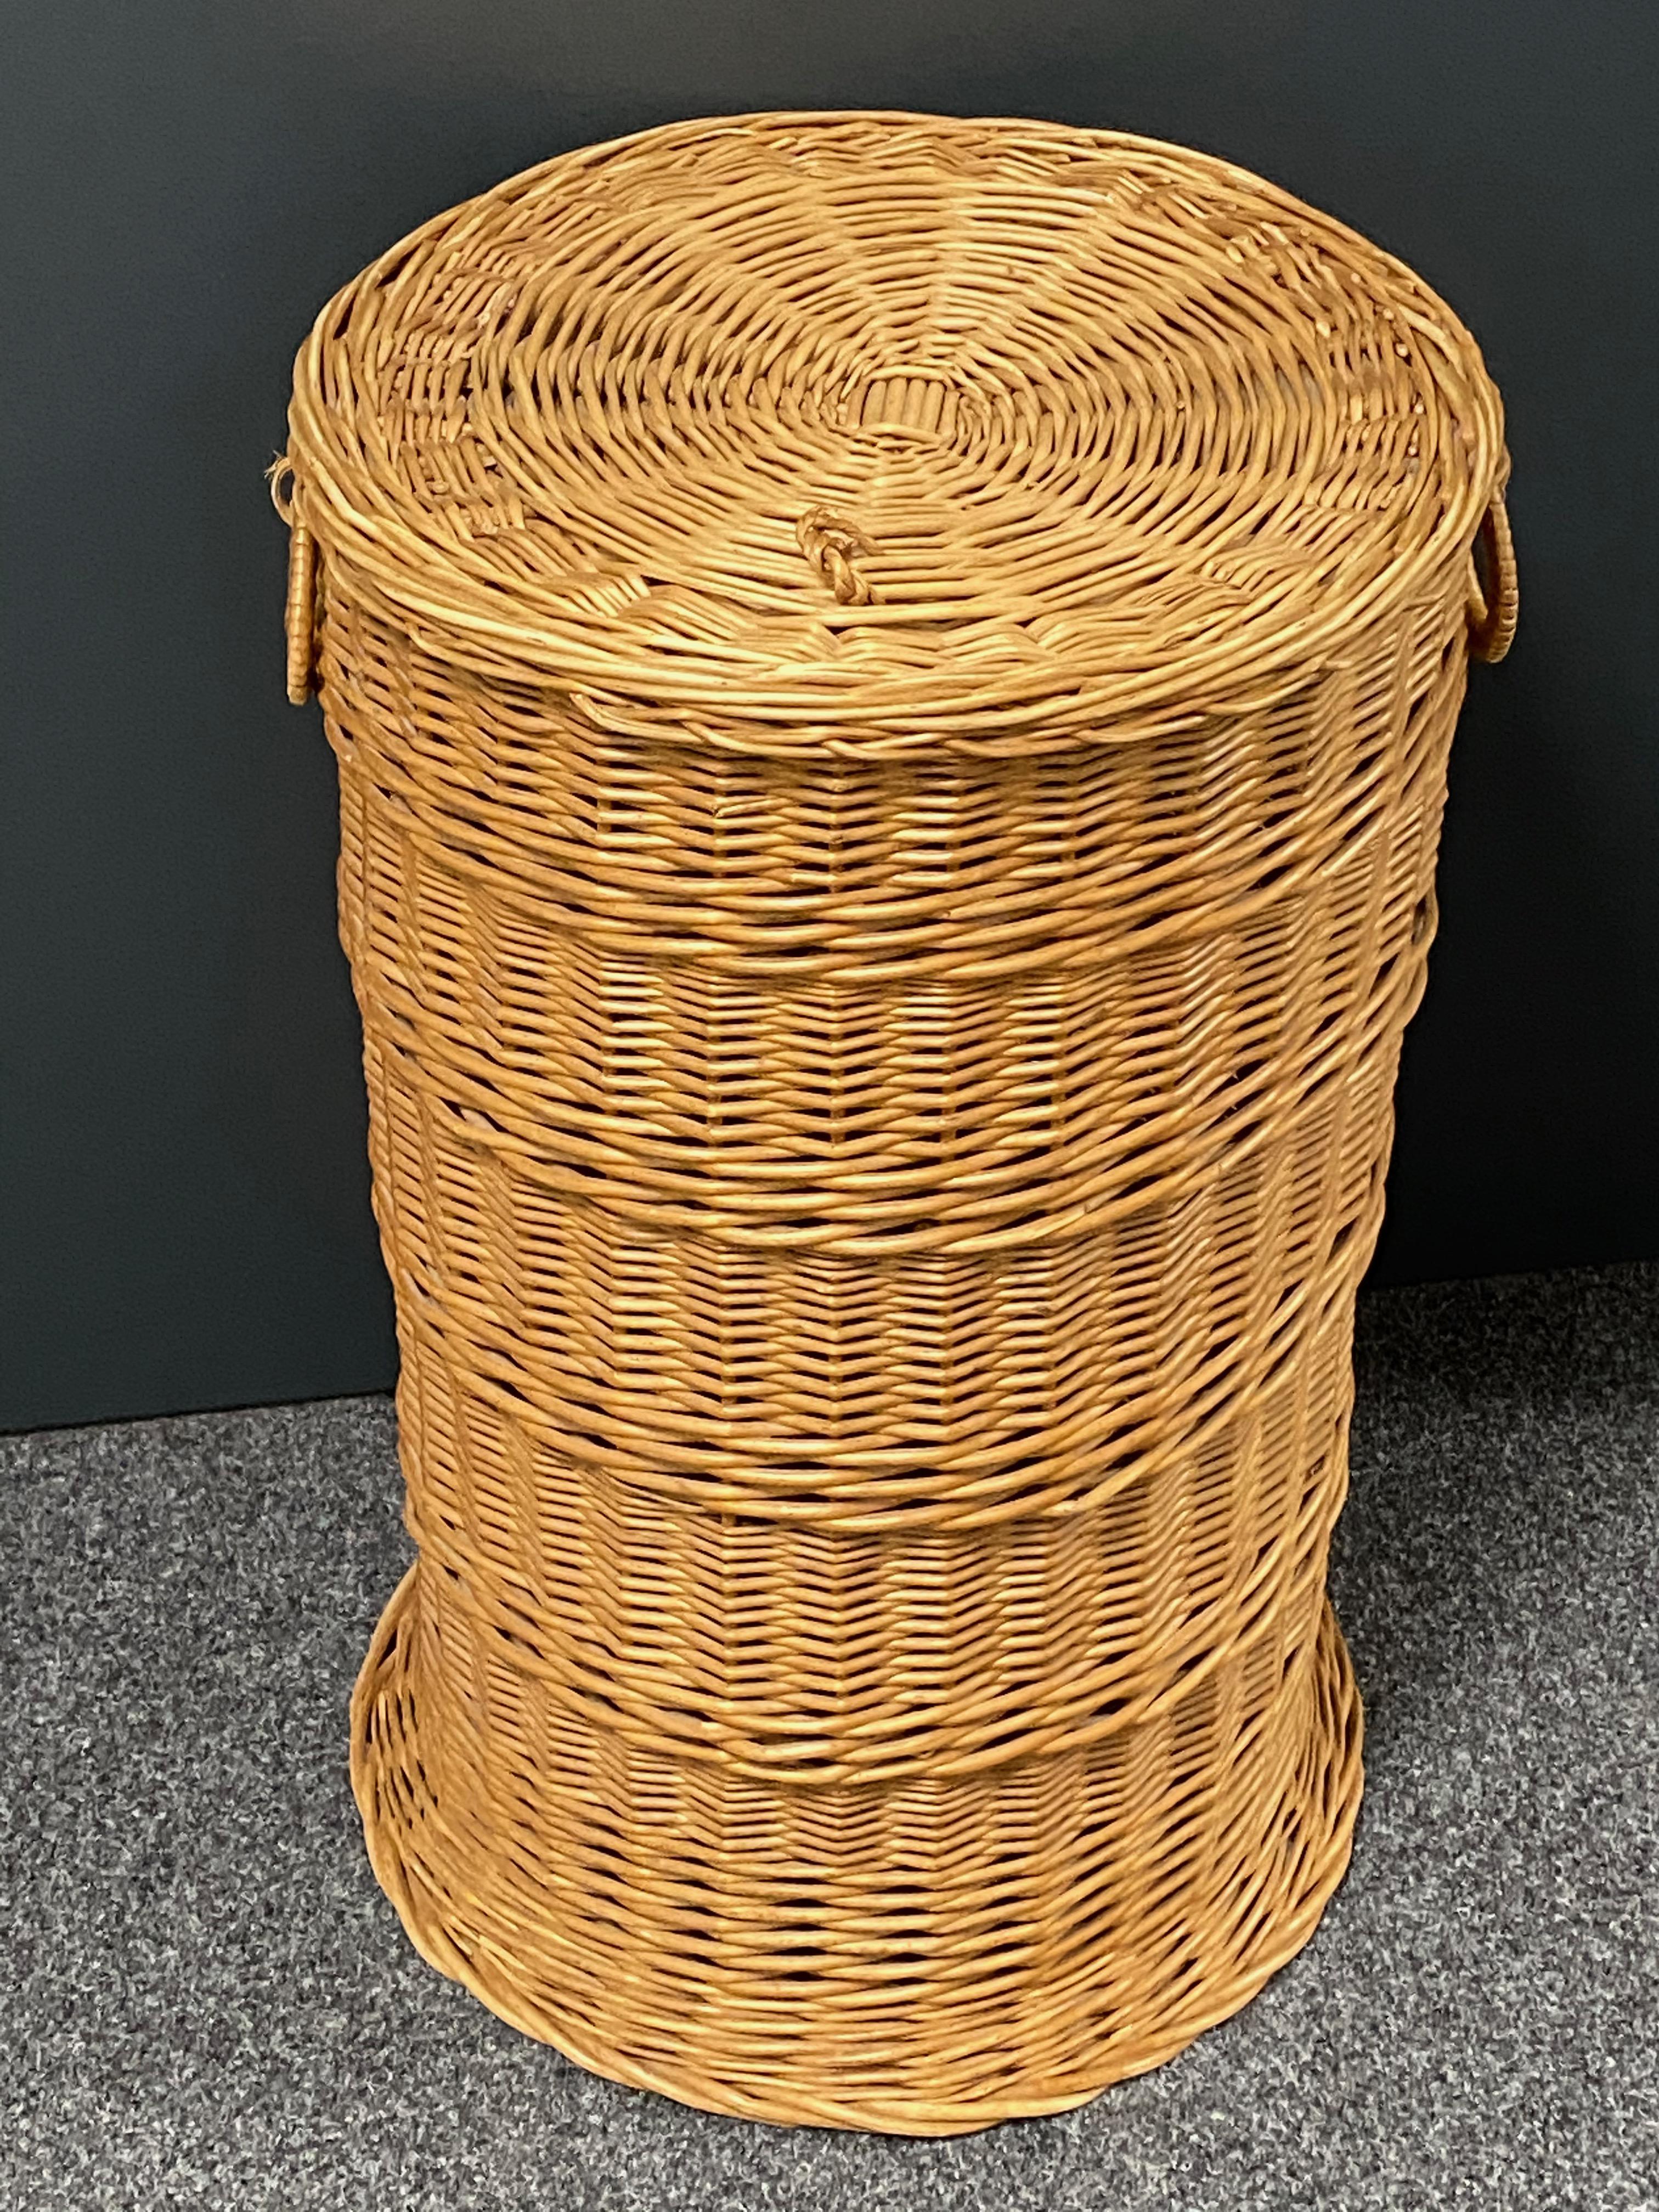 Late 20th Century Vintage Midcentury Wicker Laundry Basket Hamper, 1970s, German